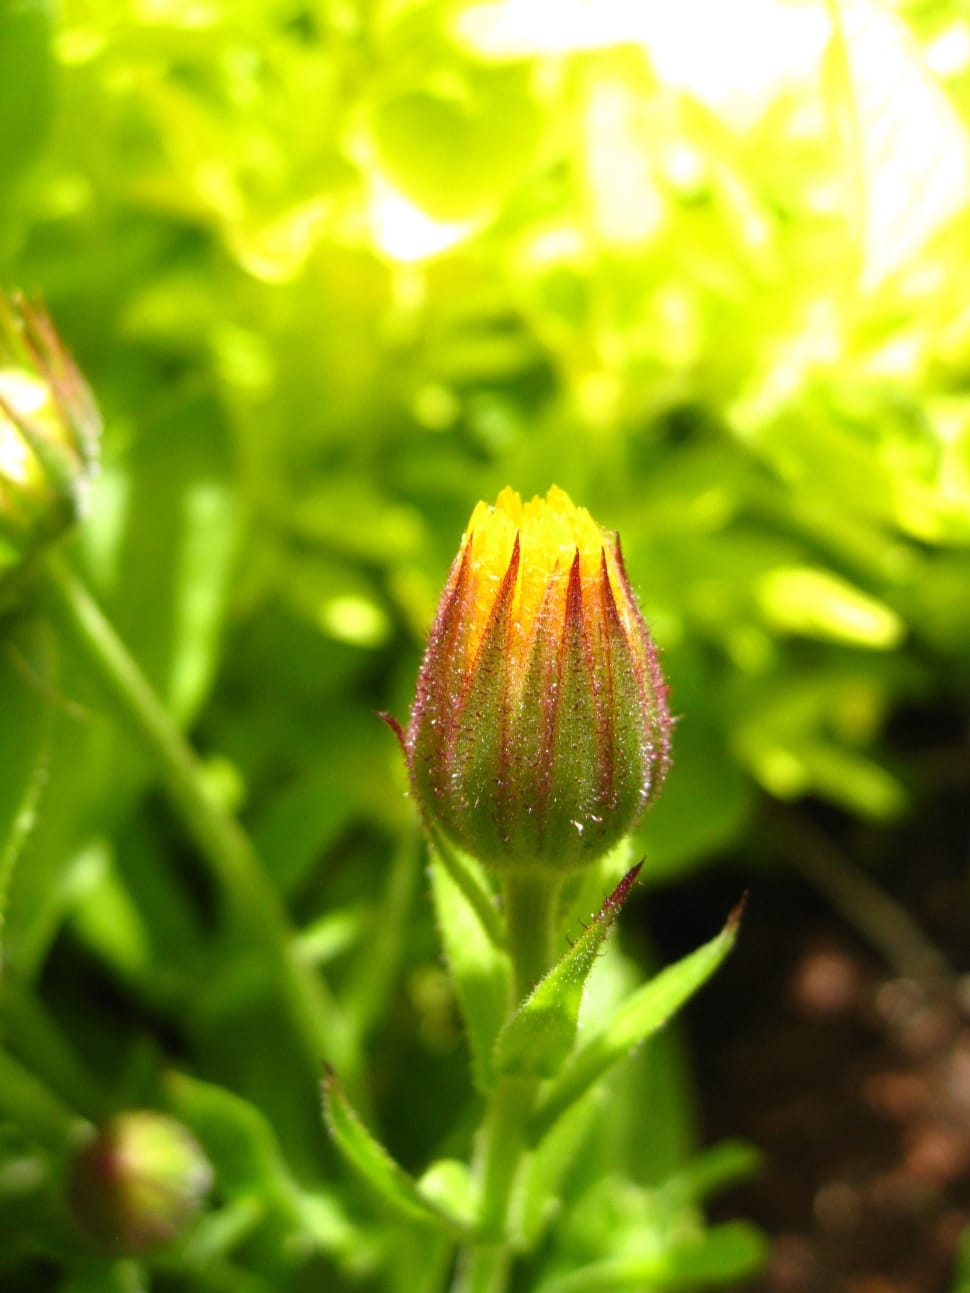 Flower, Calendula, Pot Marigold, Bud, green color, nature preview